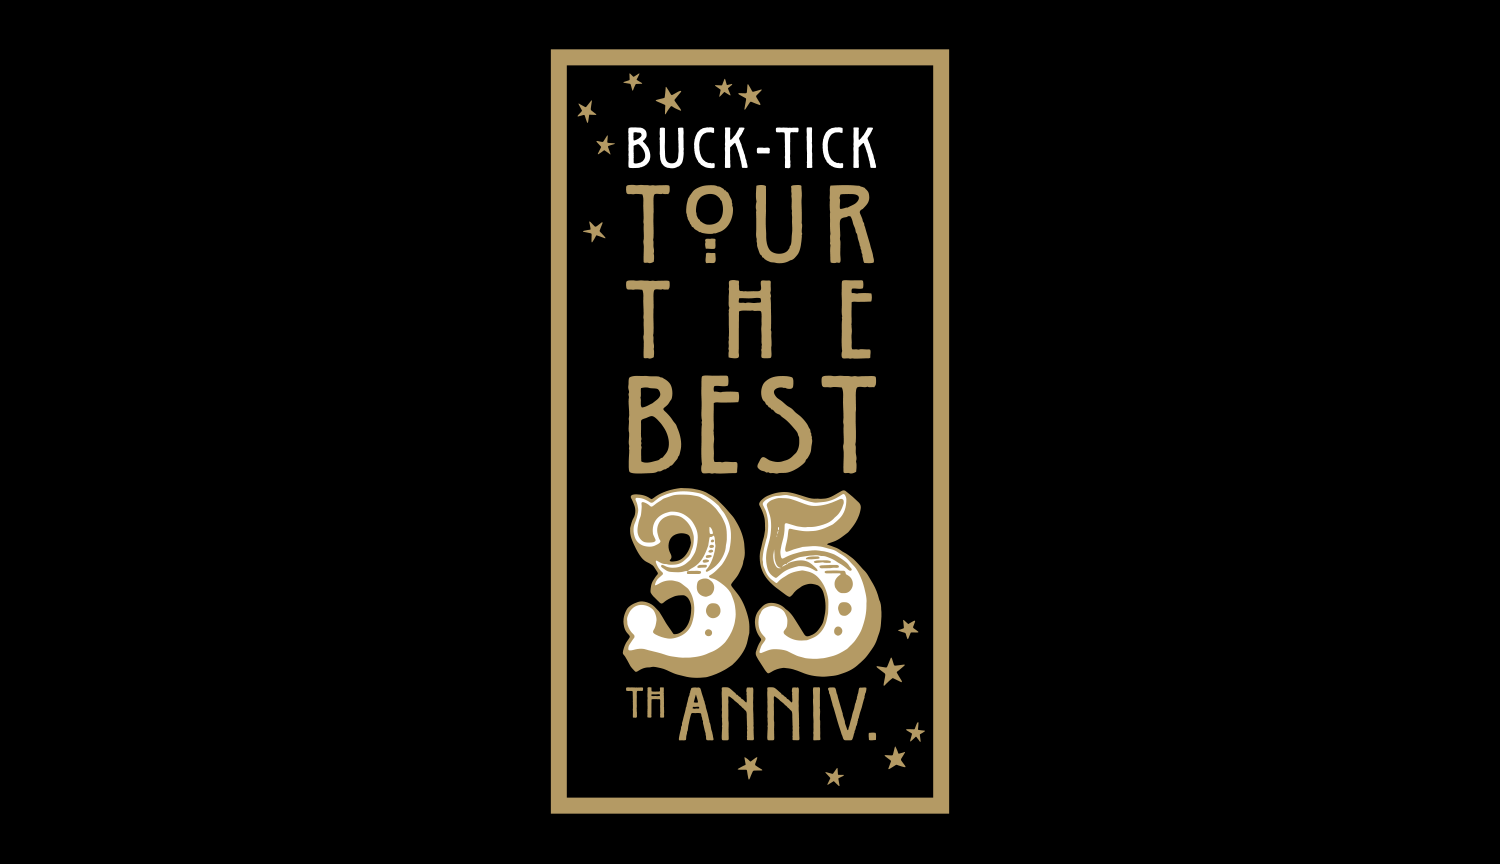 BUCK-TICK TOUR THE BEST 35th anniv.